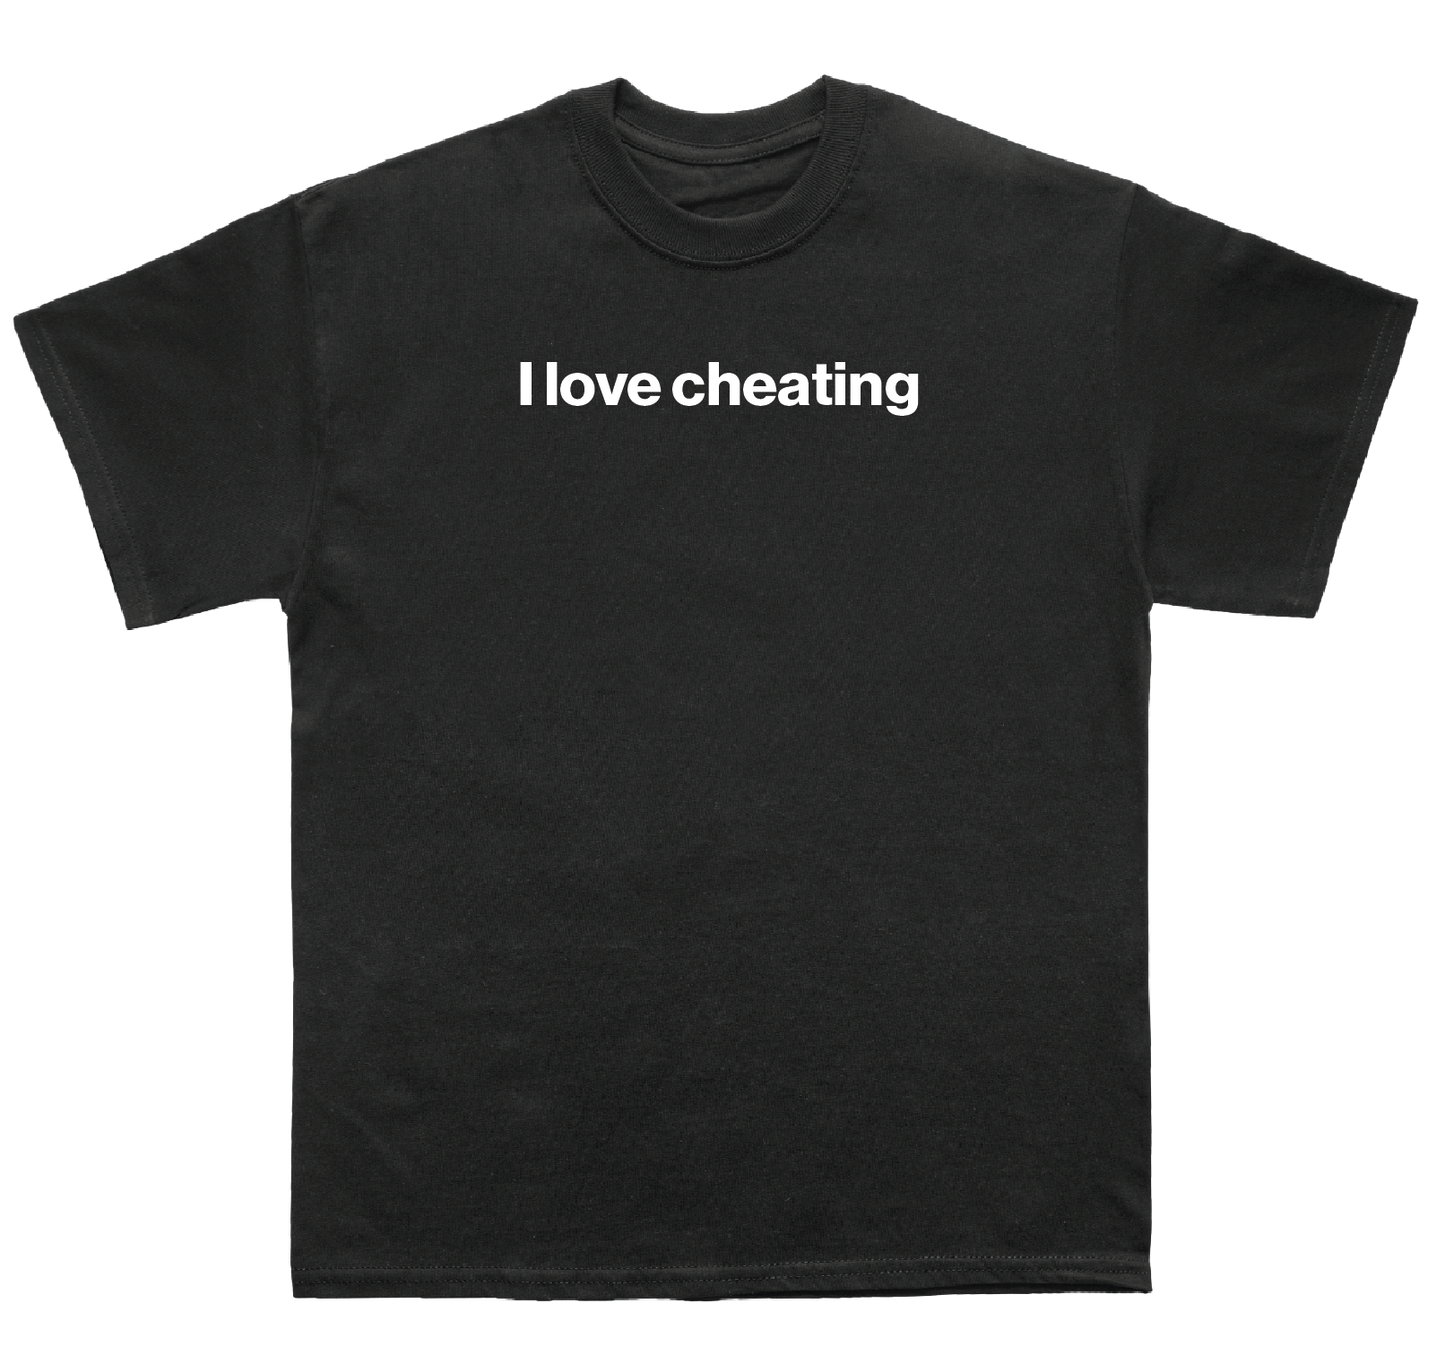 I love cheating shirt